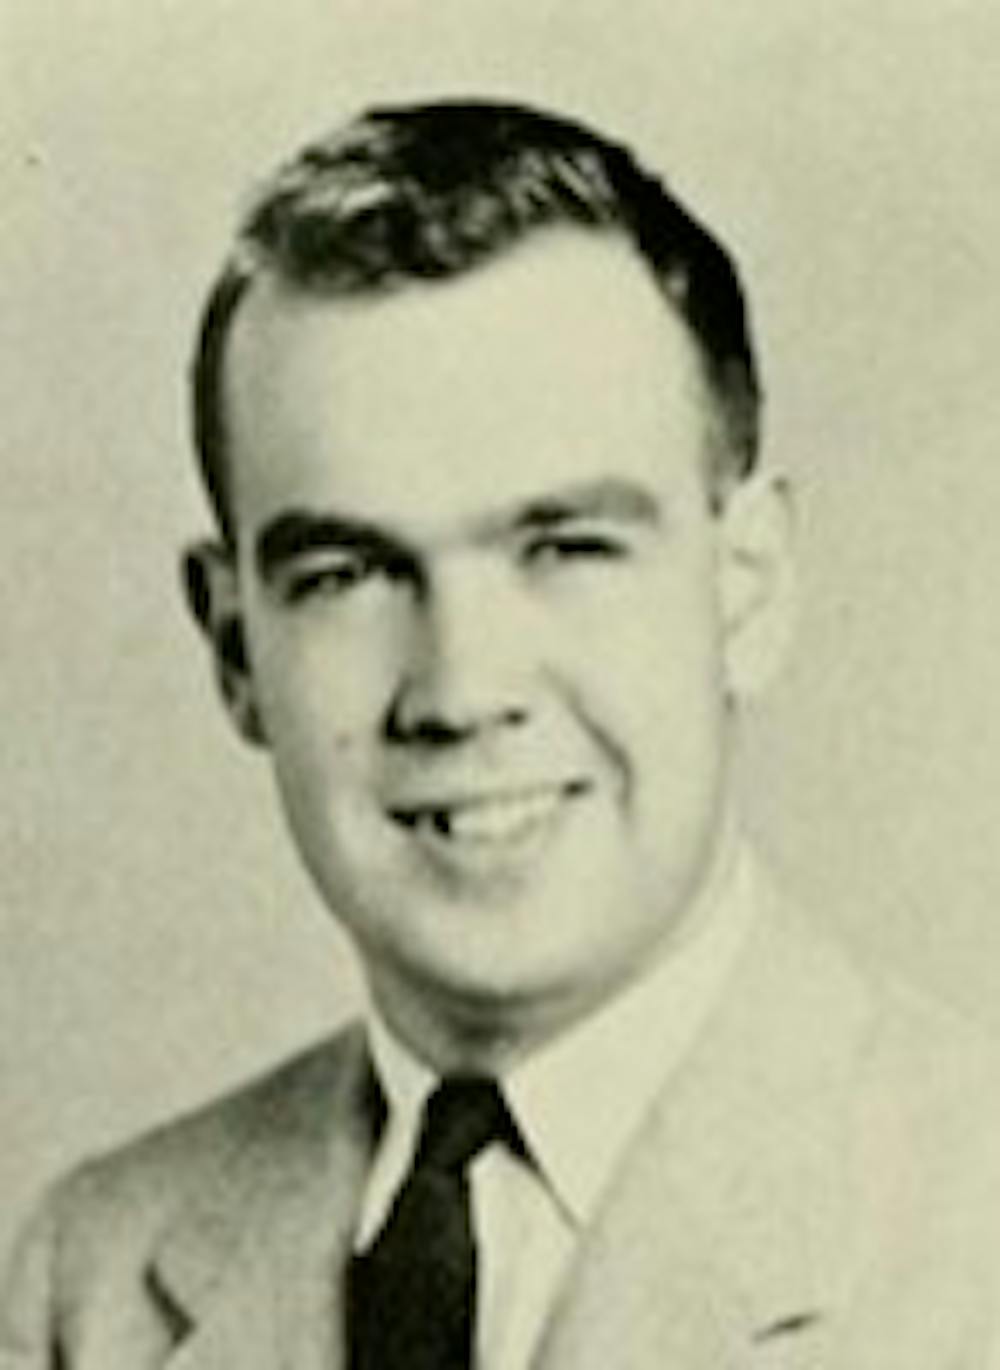 CBS newsman Charles Kuralt in 1955